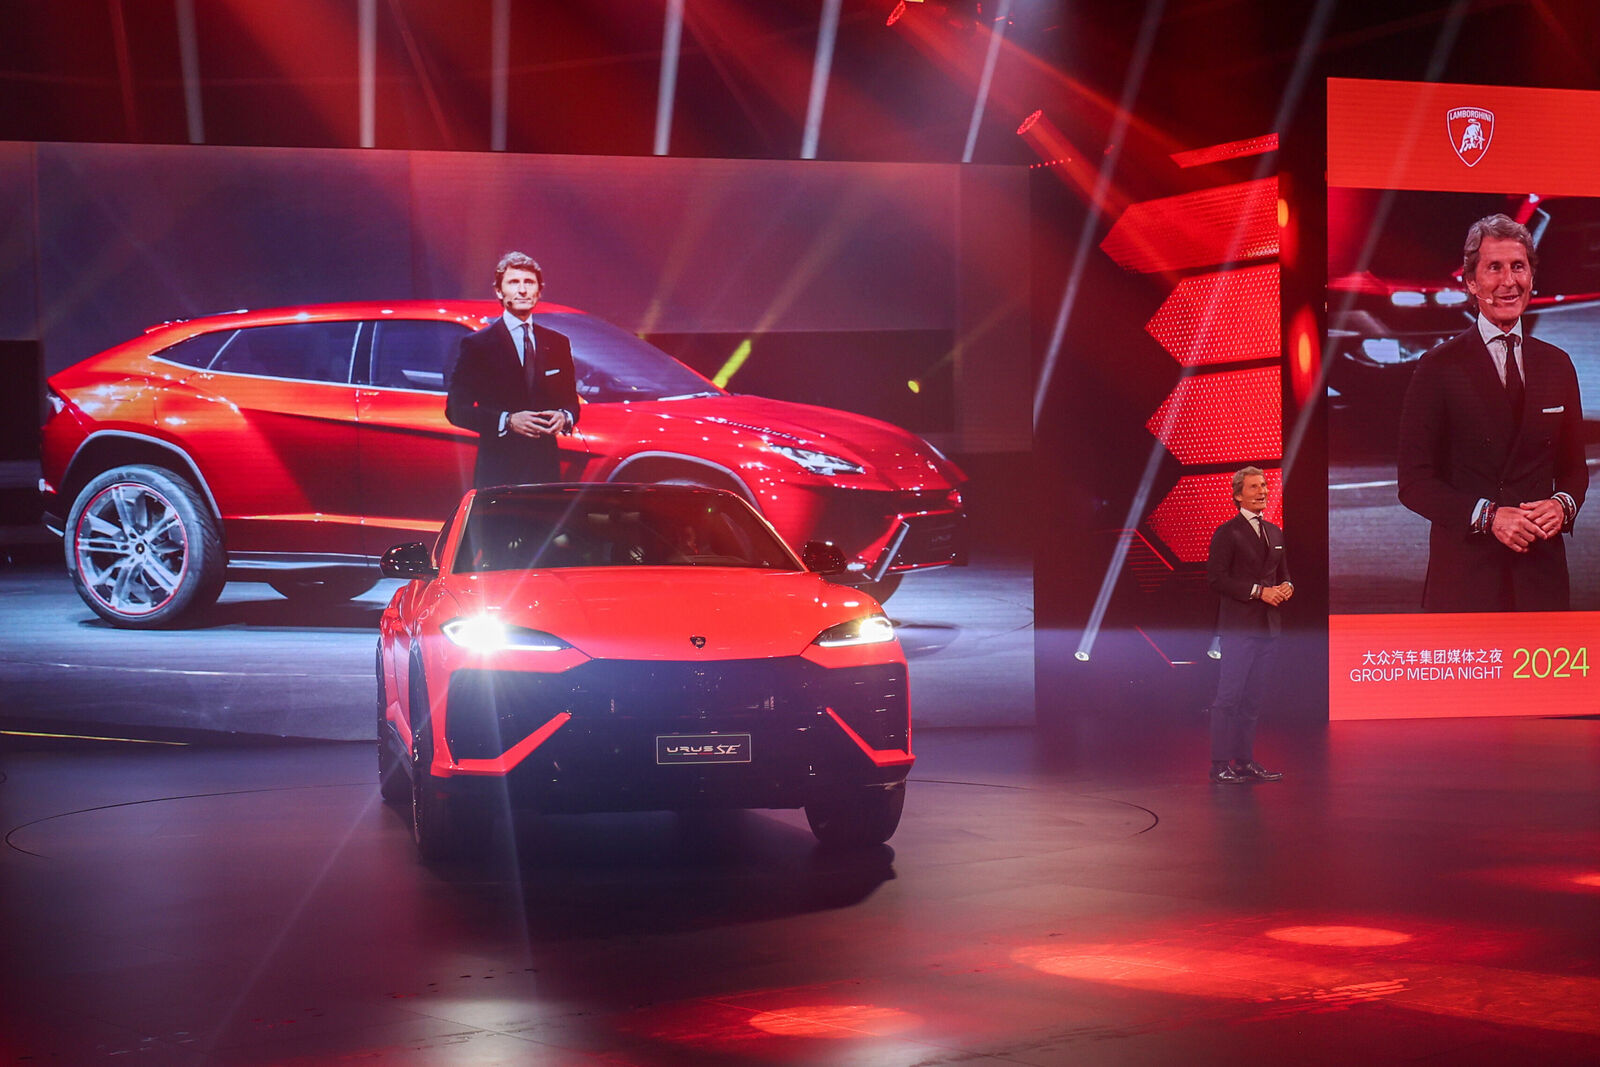 A bright orange Lamborghini Urus S is showcased under vibrant red lighting in a presentation space.